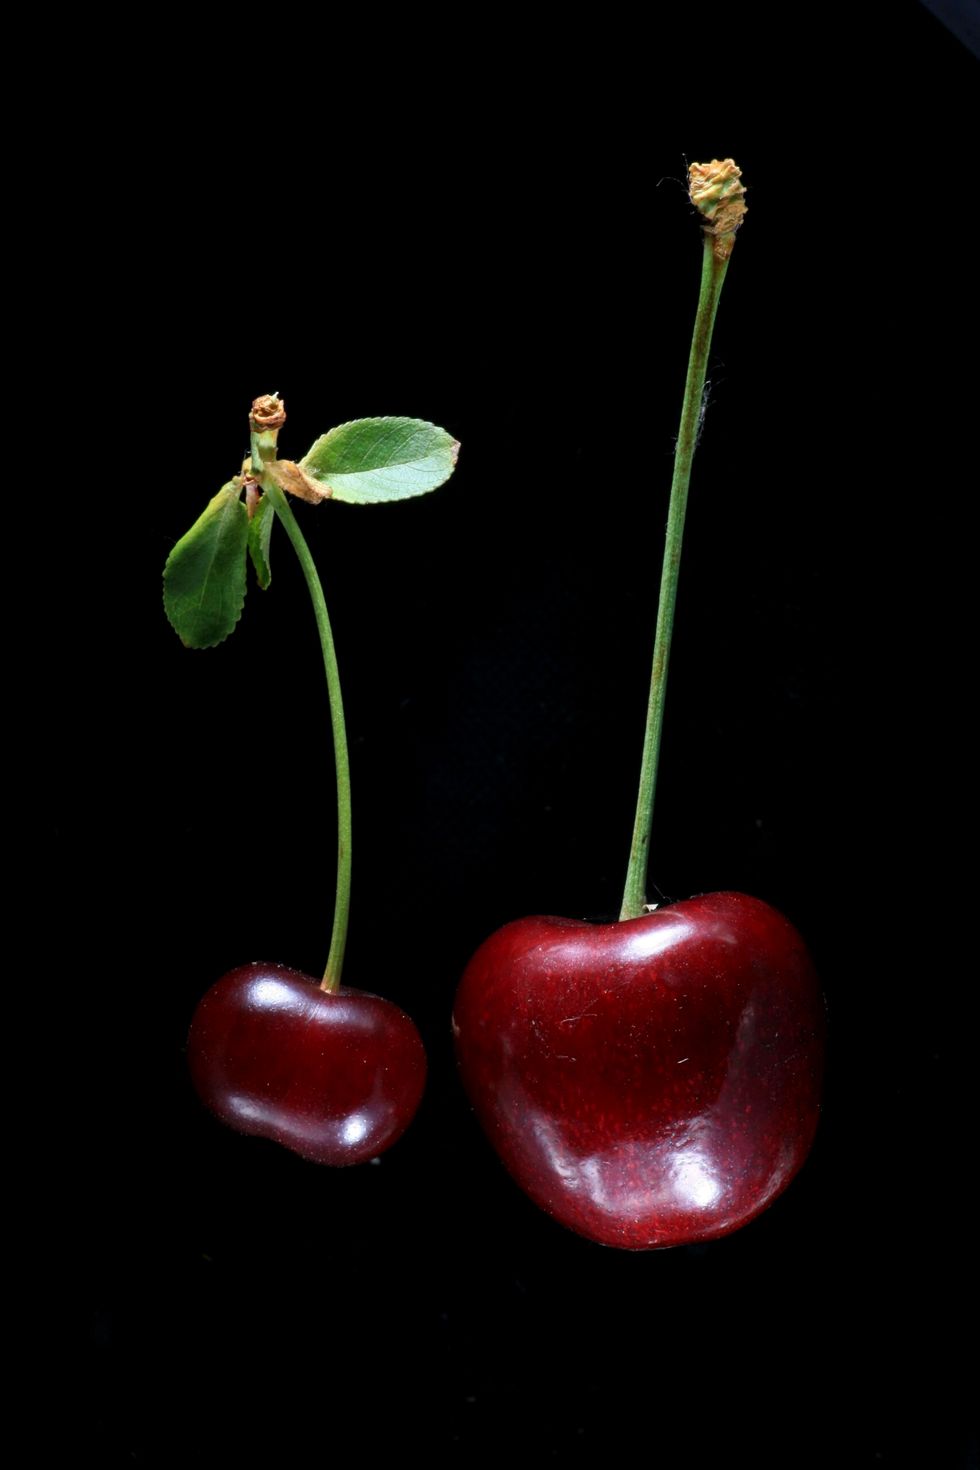 Marasca cherry